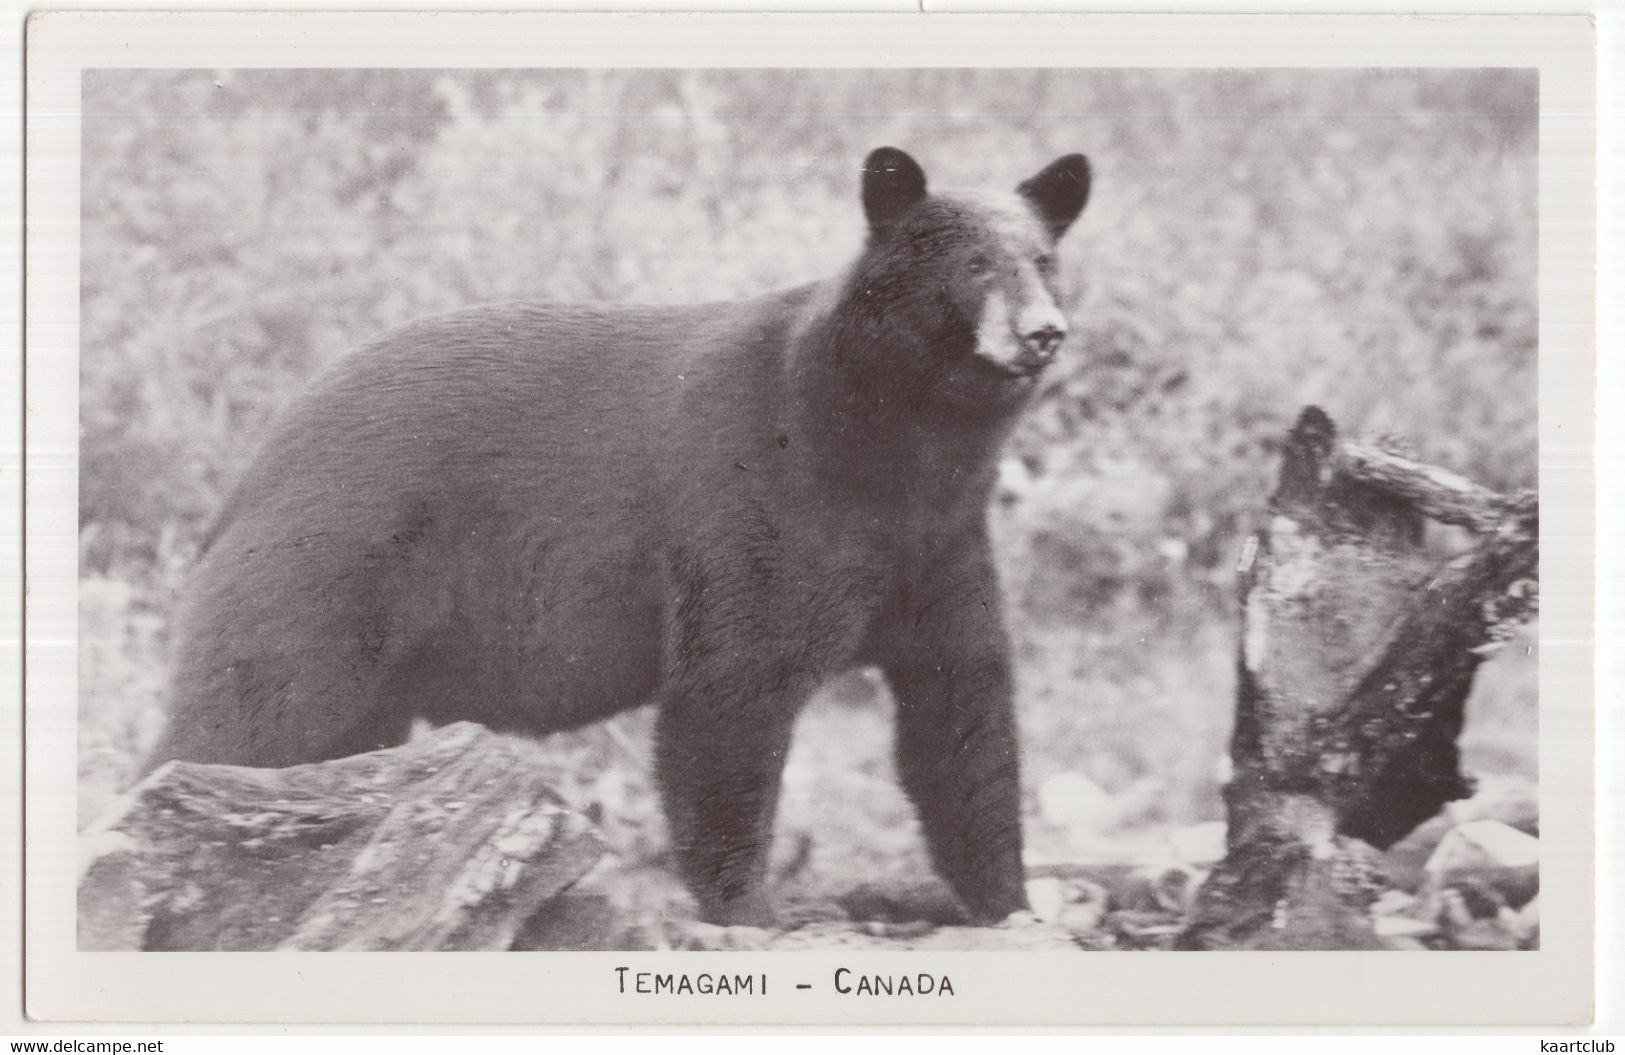 Temagami - Canada - Brown Bear - Thousand Islands